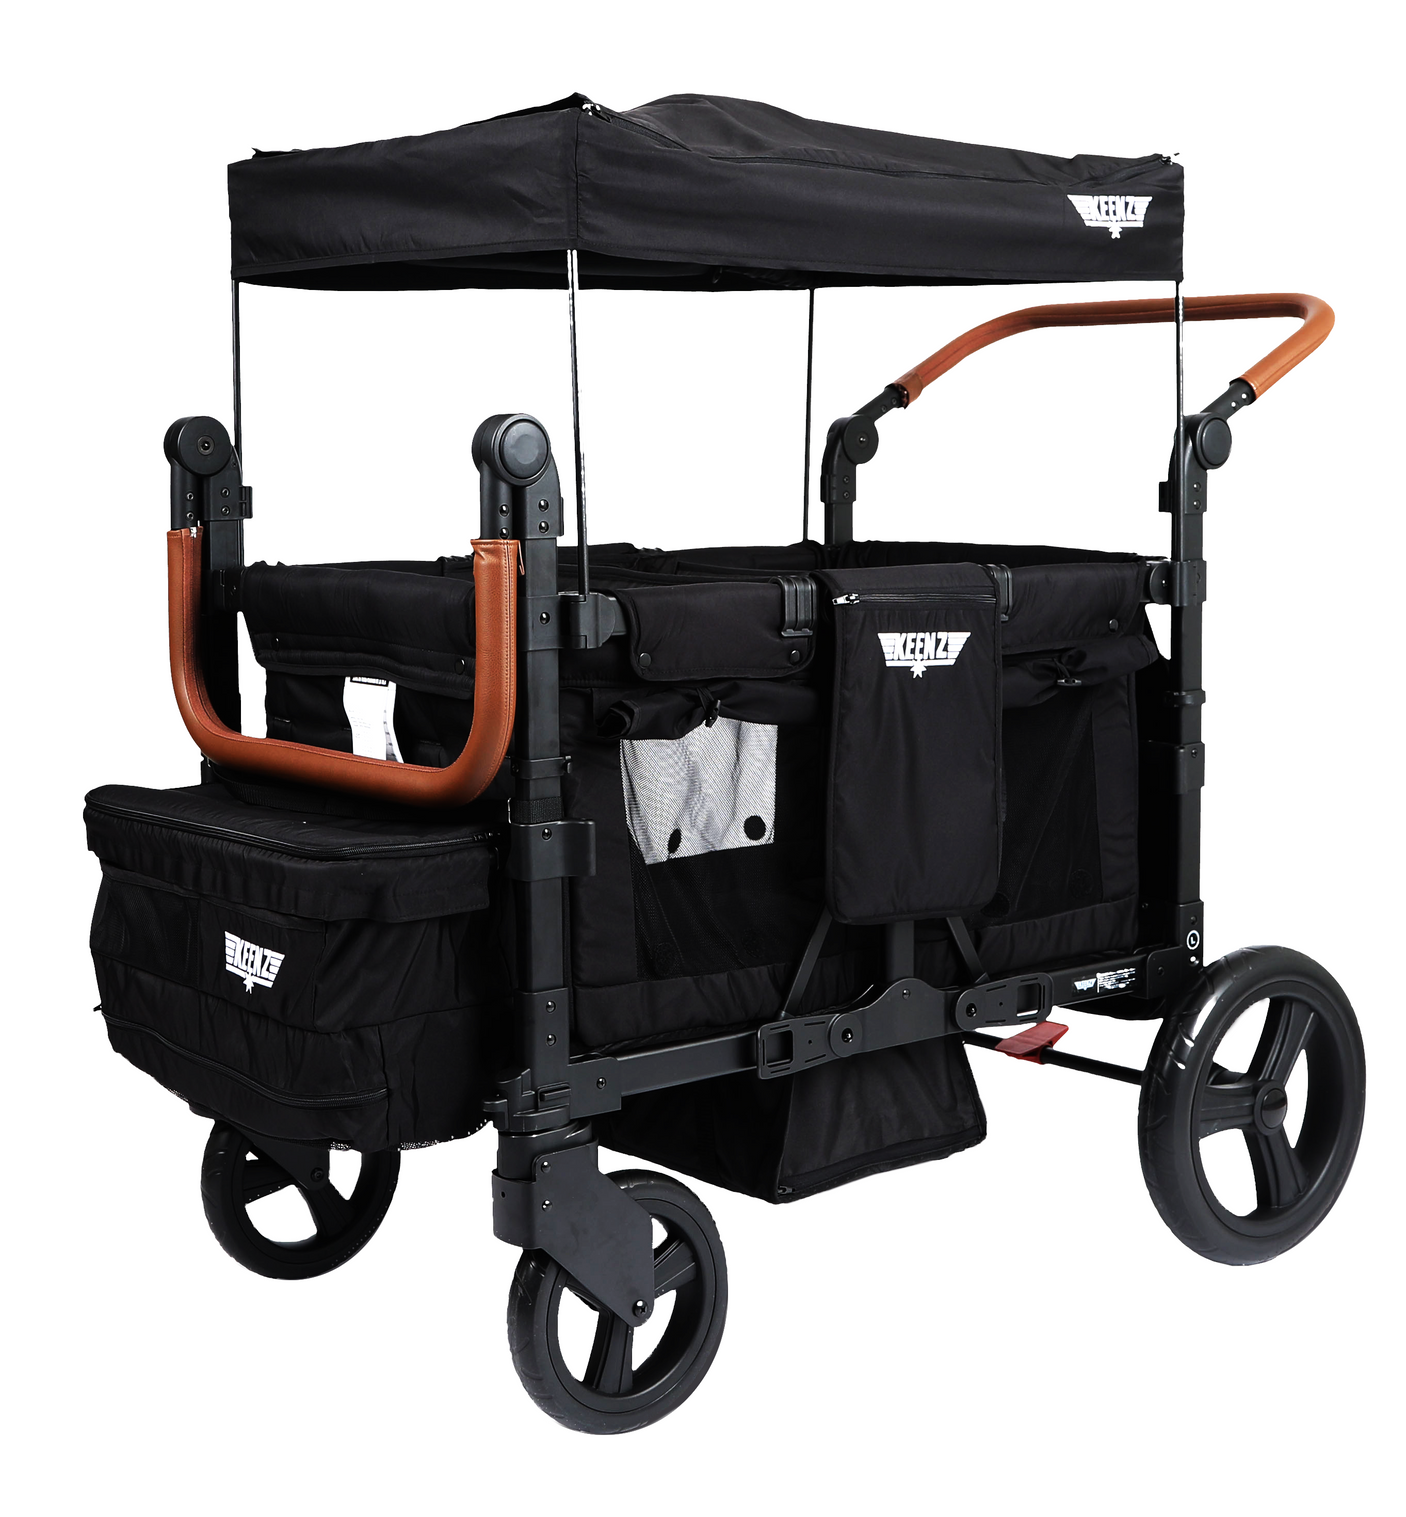 Keenz DUO: The Dynamic 4 Passenger Stroller Wagon